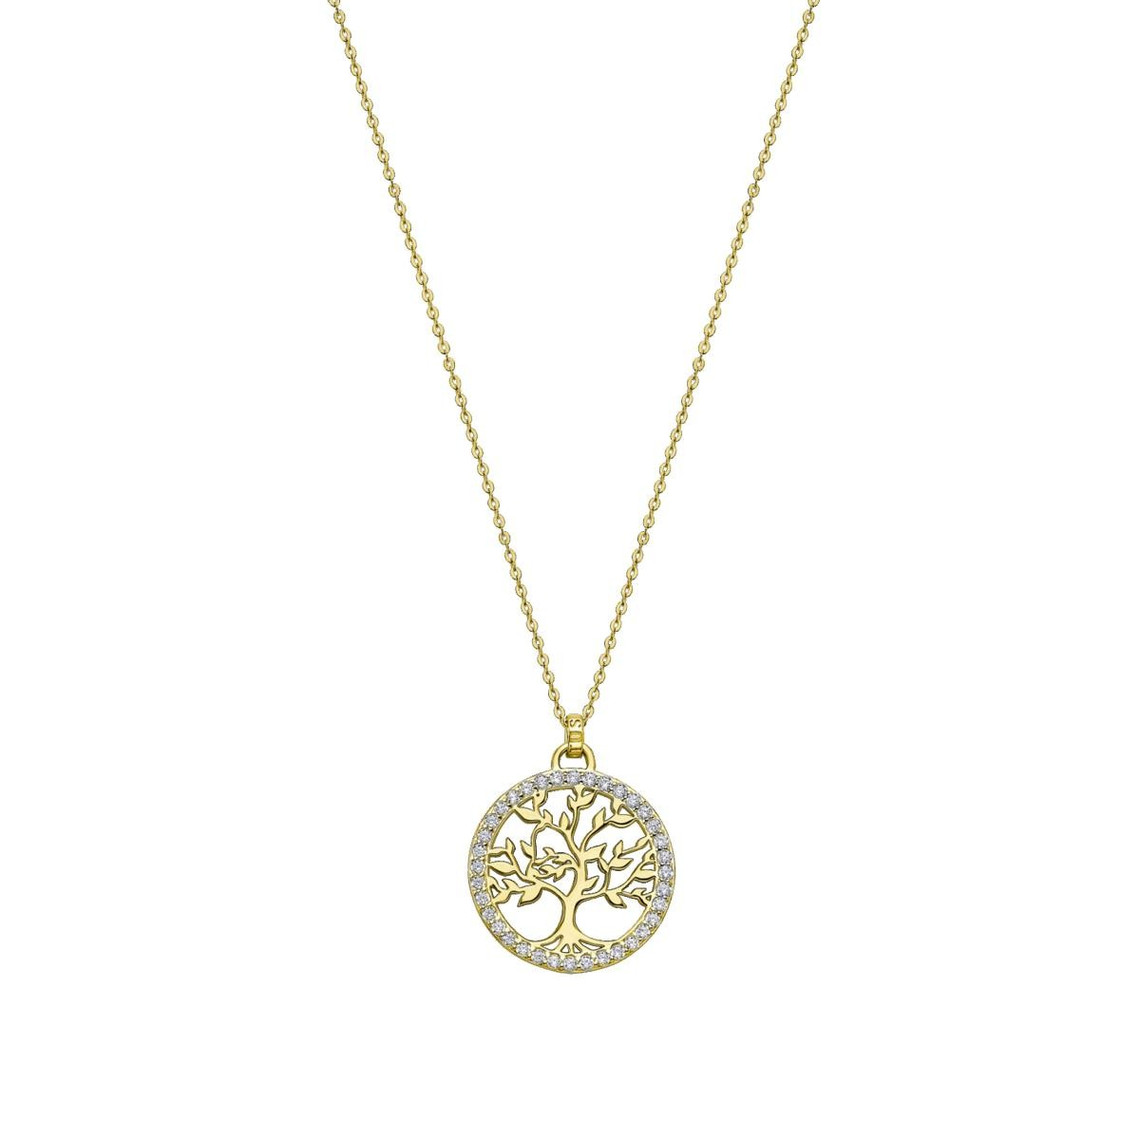 collier lotus silver tree of life lp1746-1-2 - collier pendentif ajouré arbre de vie lotus silver